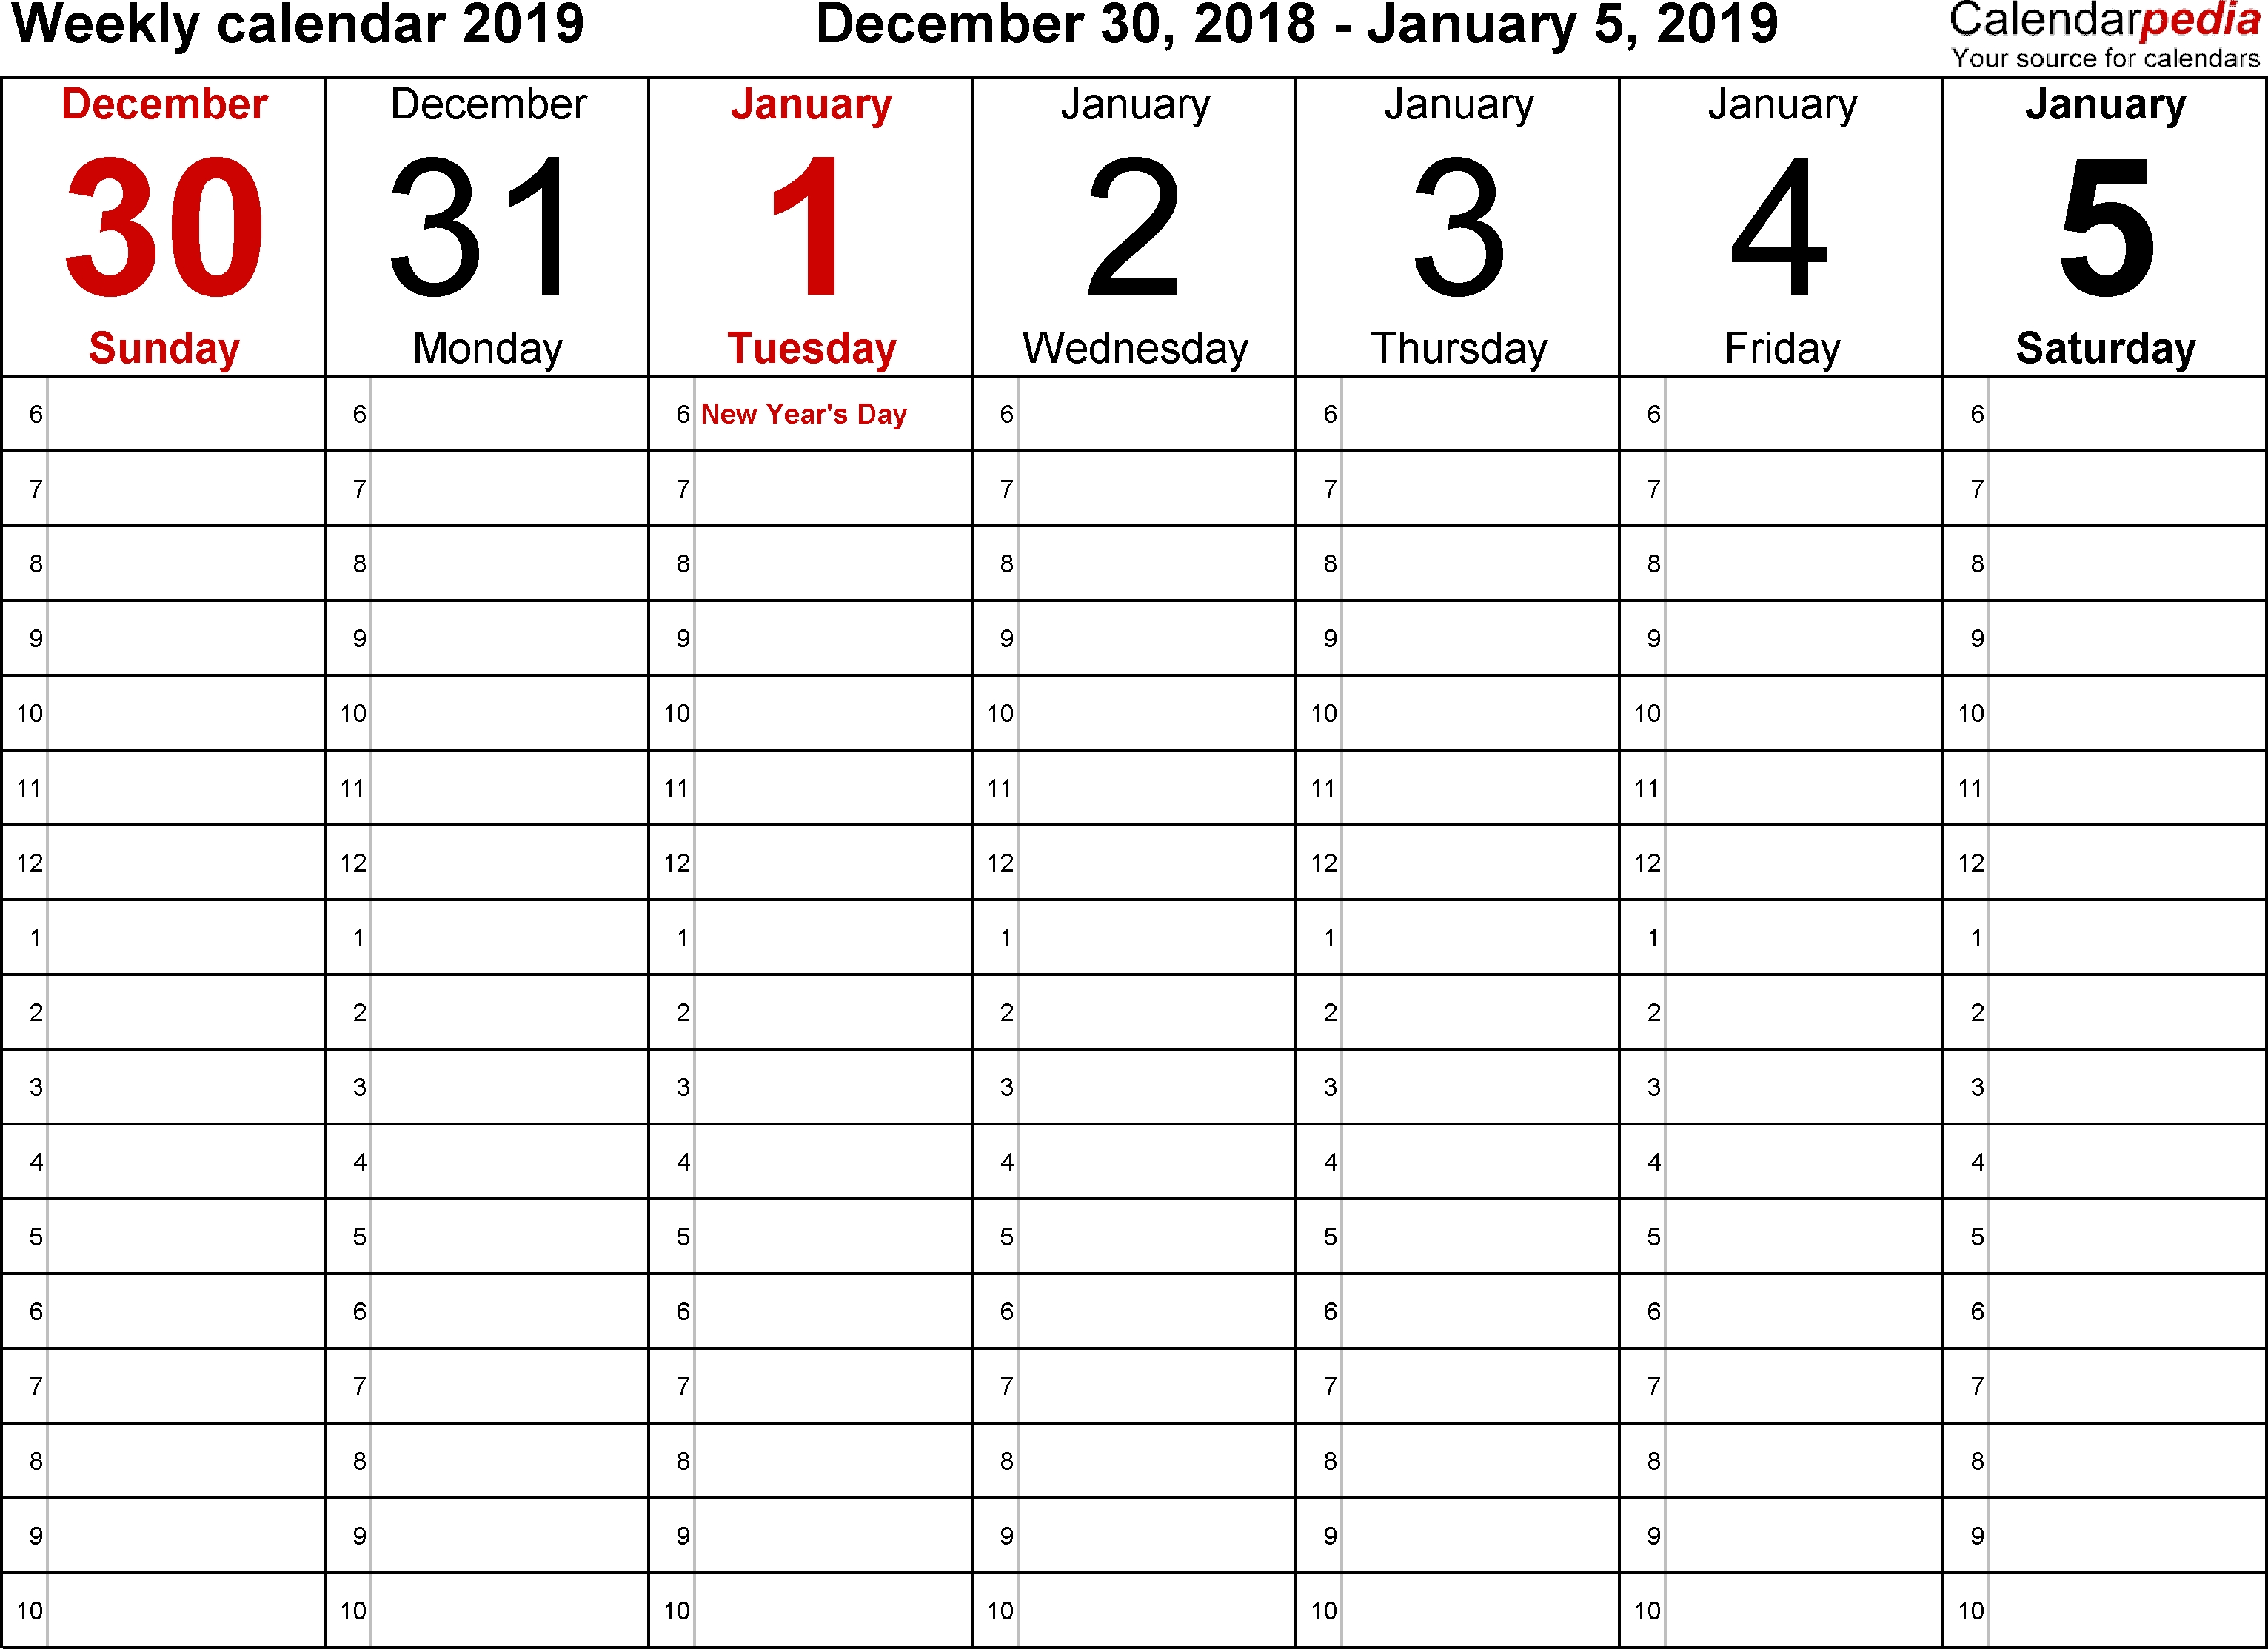 Weekly Calendar 2019 For Word - 12 Free Printable Templates-Weekly Calendar 2020 Template Students 7 Days A Week